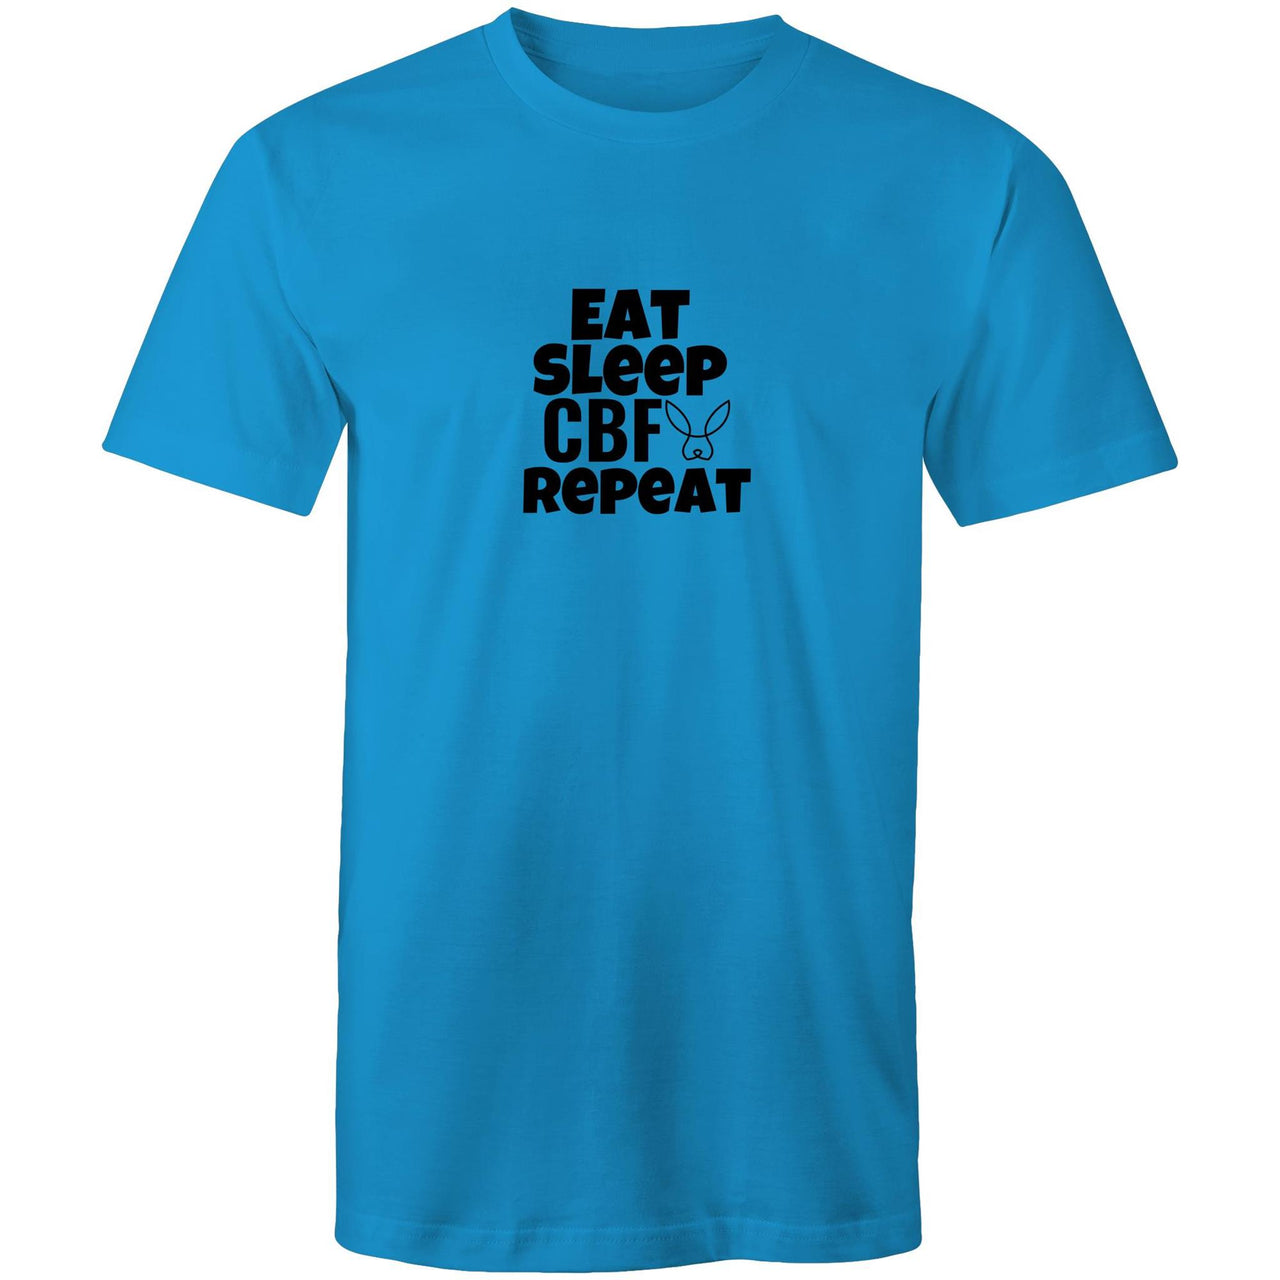 Eat Sleep CBF Repeat Crew Blue T-Shirt by CBF Clothing